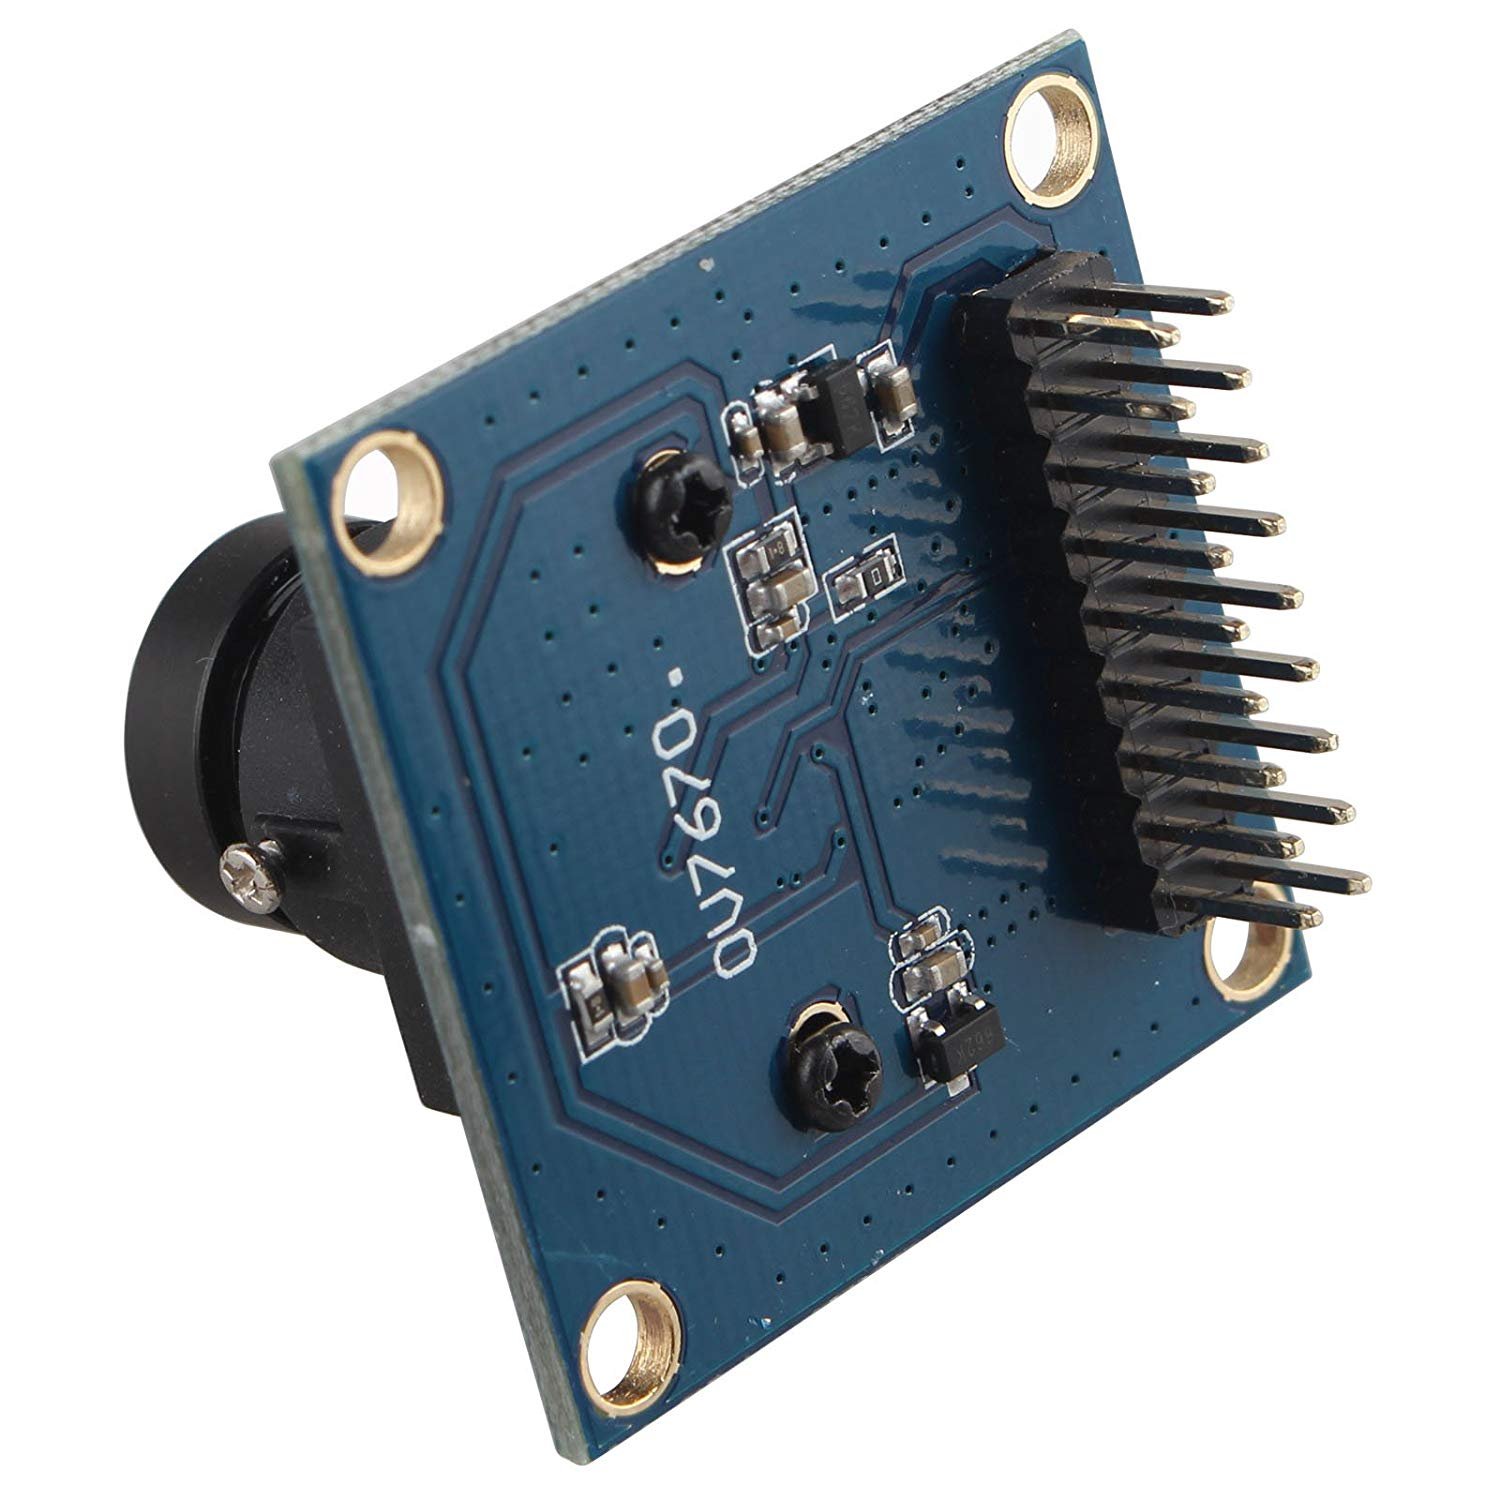 WINGONEER 0.3 Megapixels OV7670 640x480 CMOS Sensor Camera Module SCCB Compatible for I2C